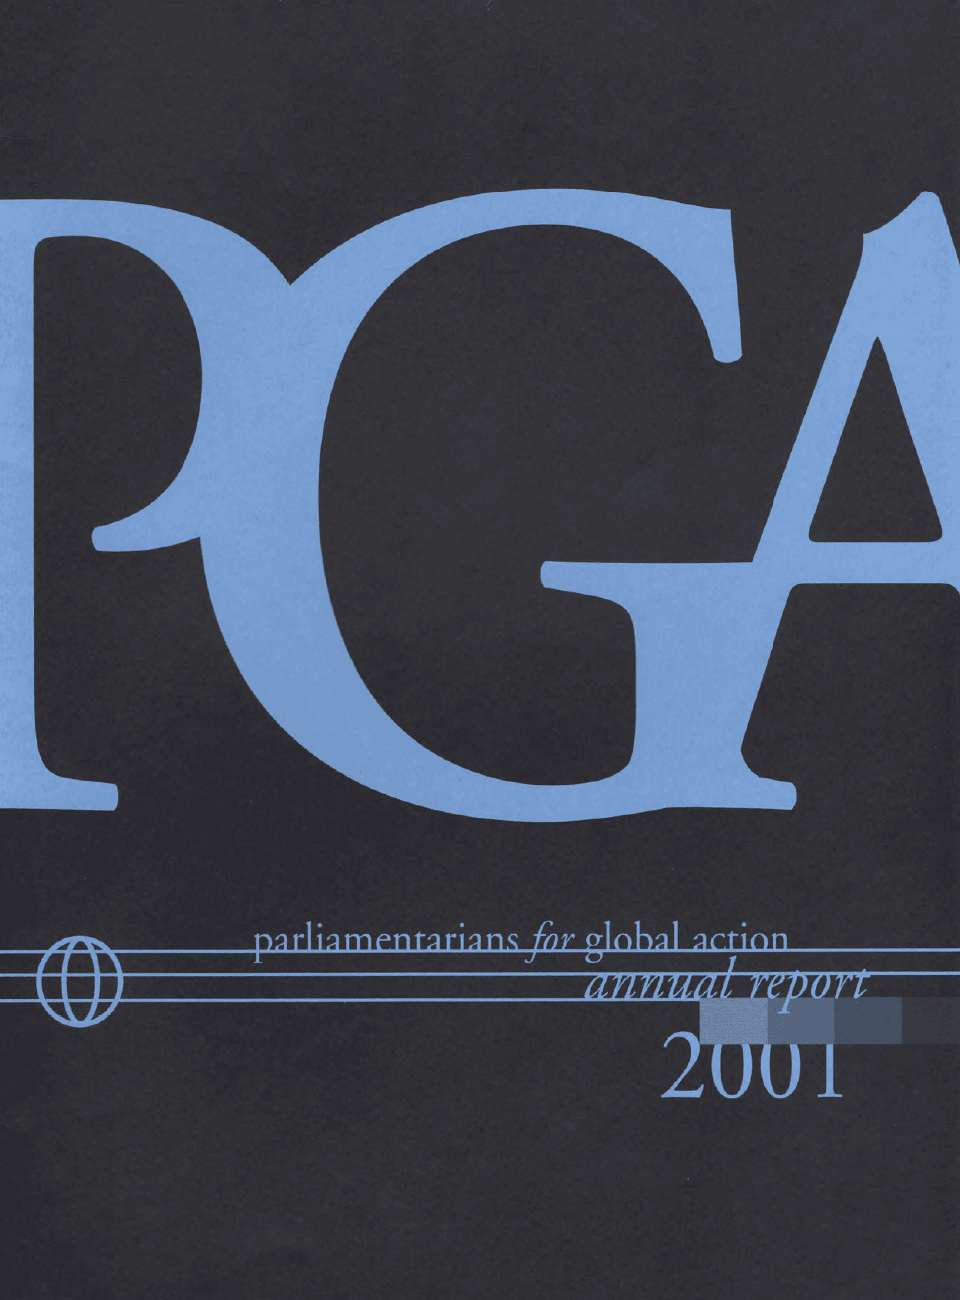 Rapport annuel de PGA 2001